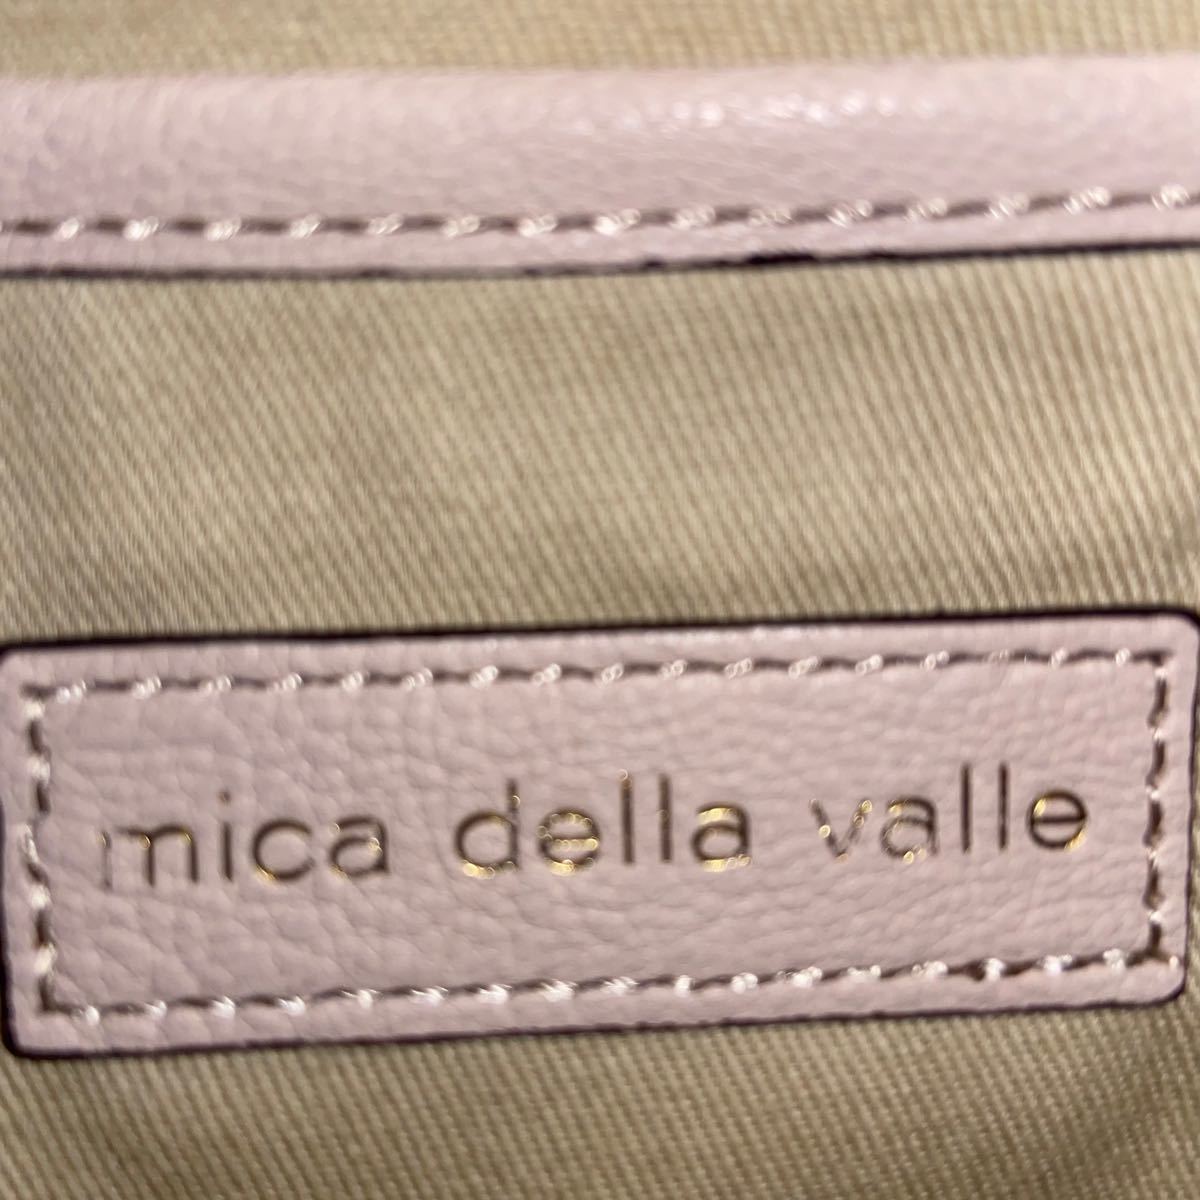 MICA DELLA VALLE 2wayバッグ 極美品 新品未使用 ショルダーバッグ